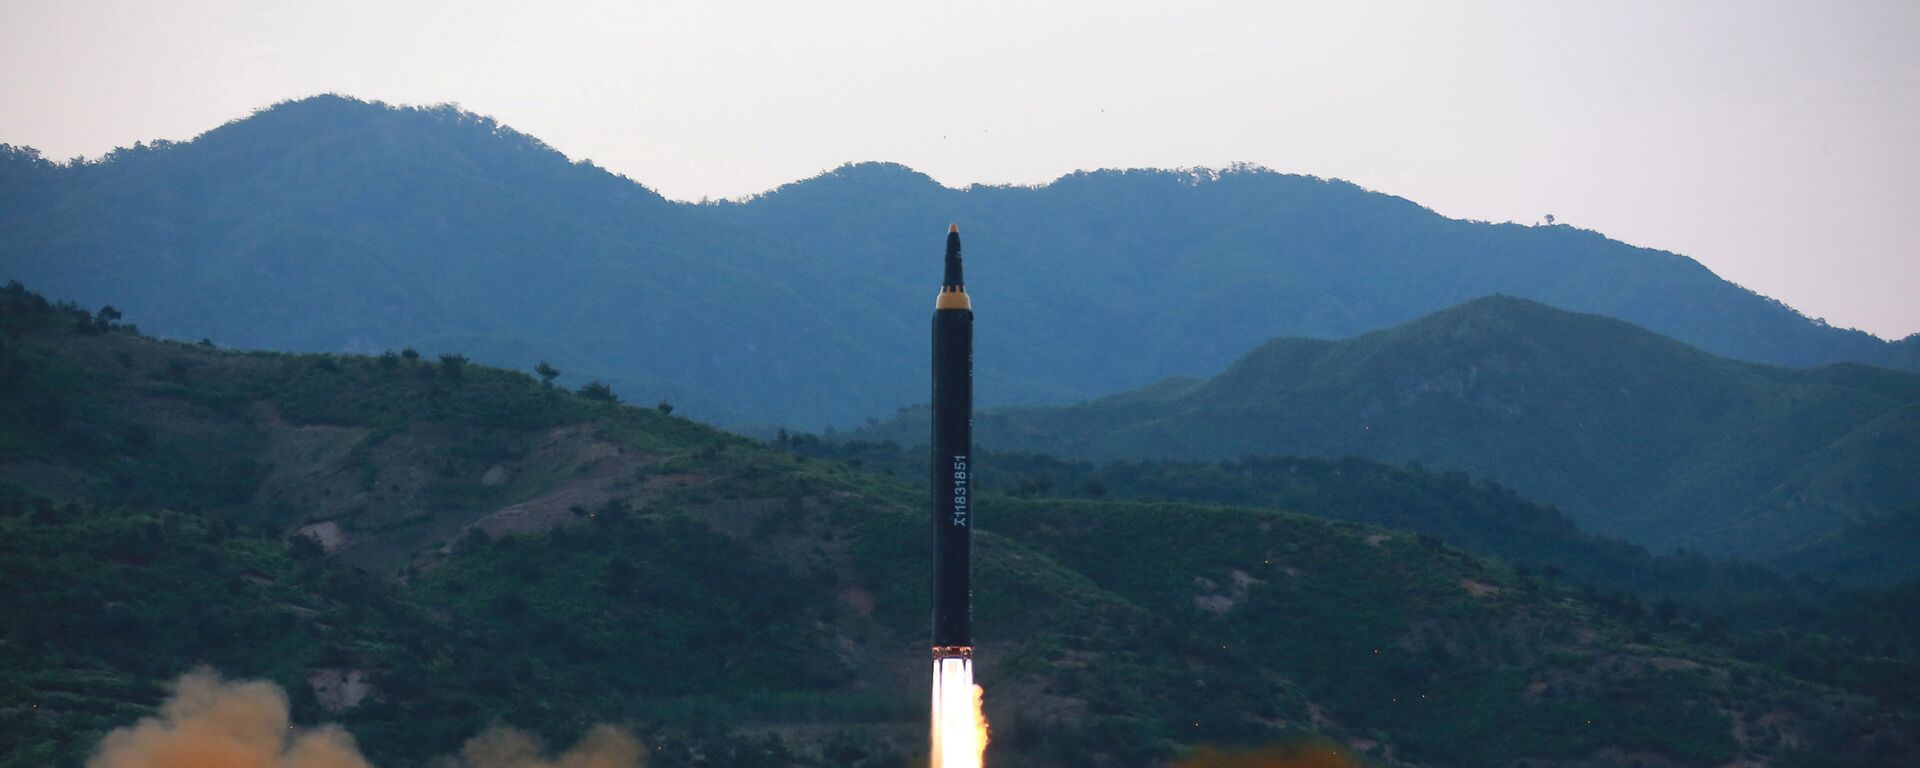 La prueba del misil norcoreano Hwasong-12 (archivo) - Sputnik Mundo, 1920, 05.01.2022